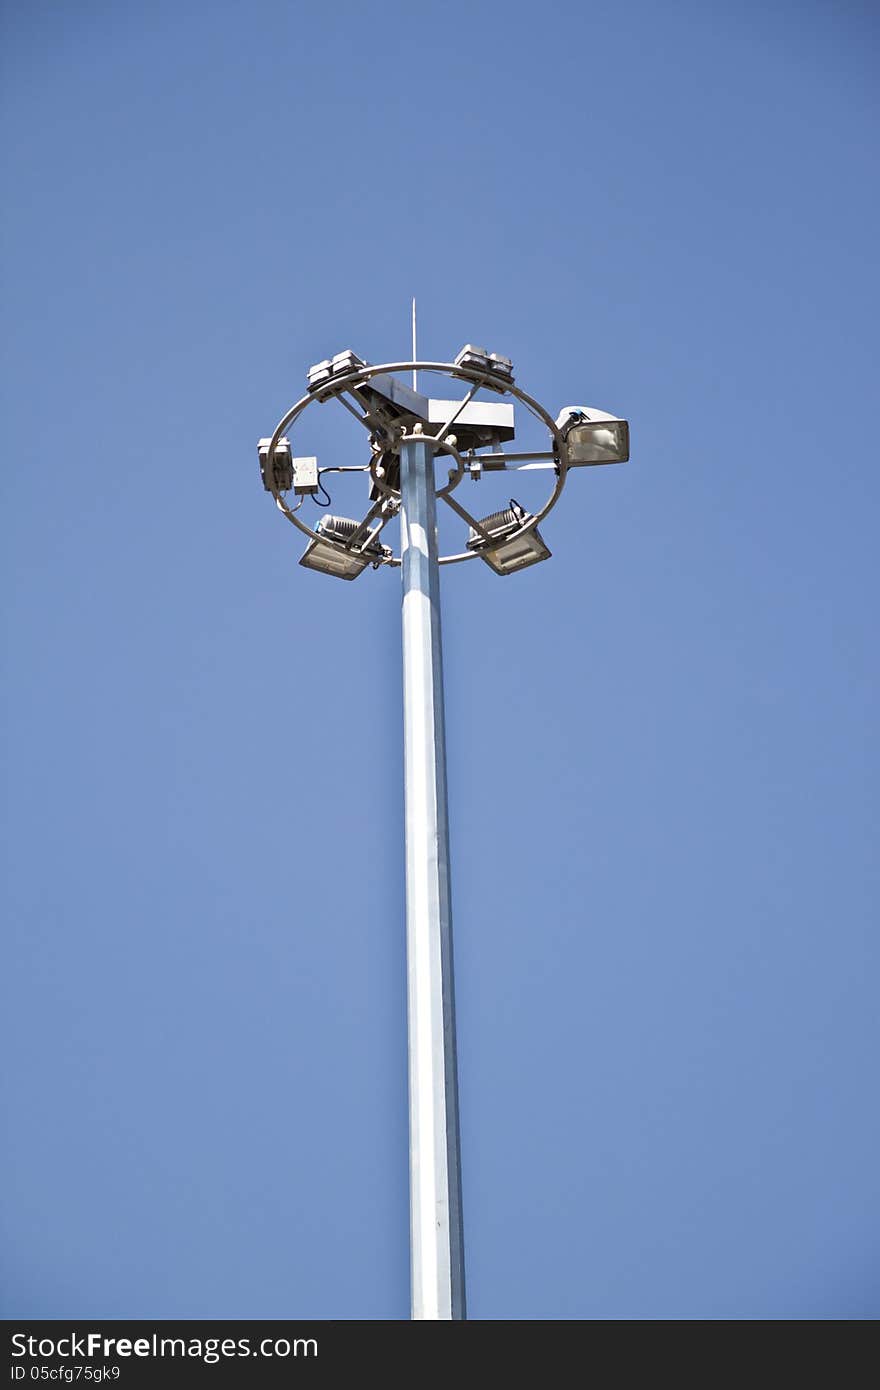 A six way street lamp under the blue sky